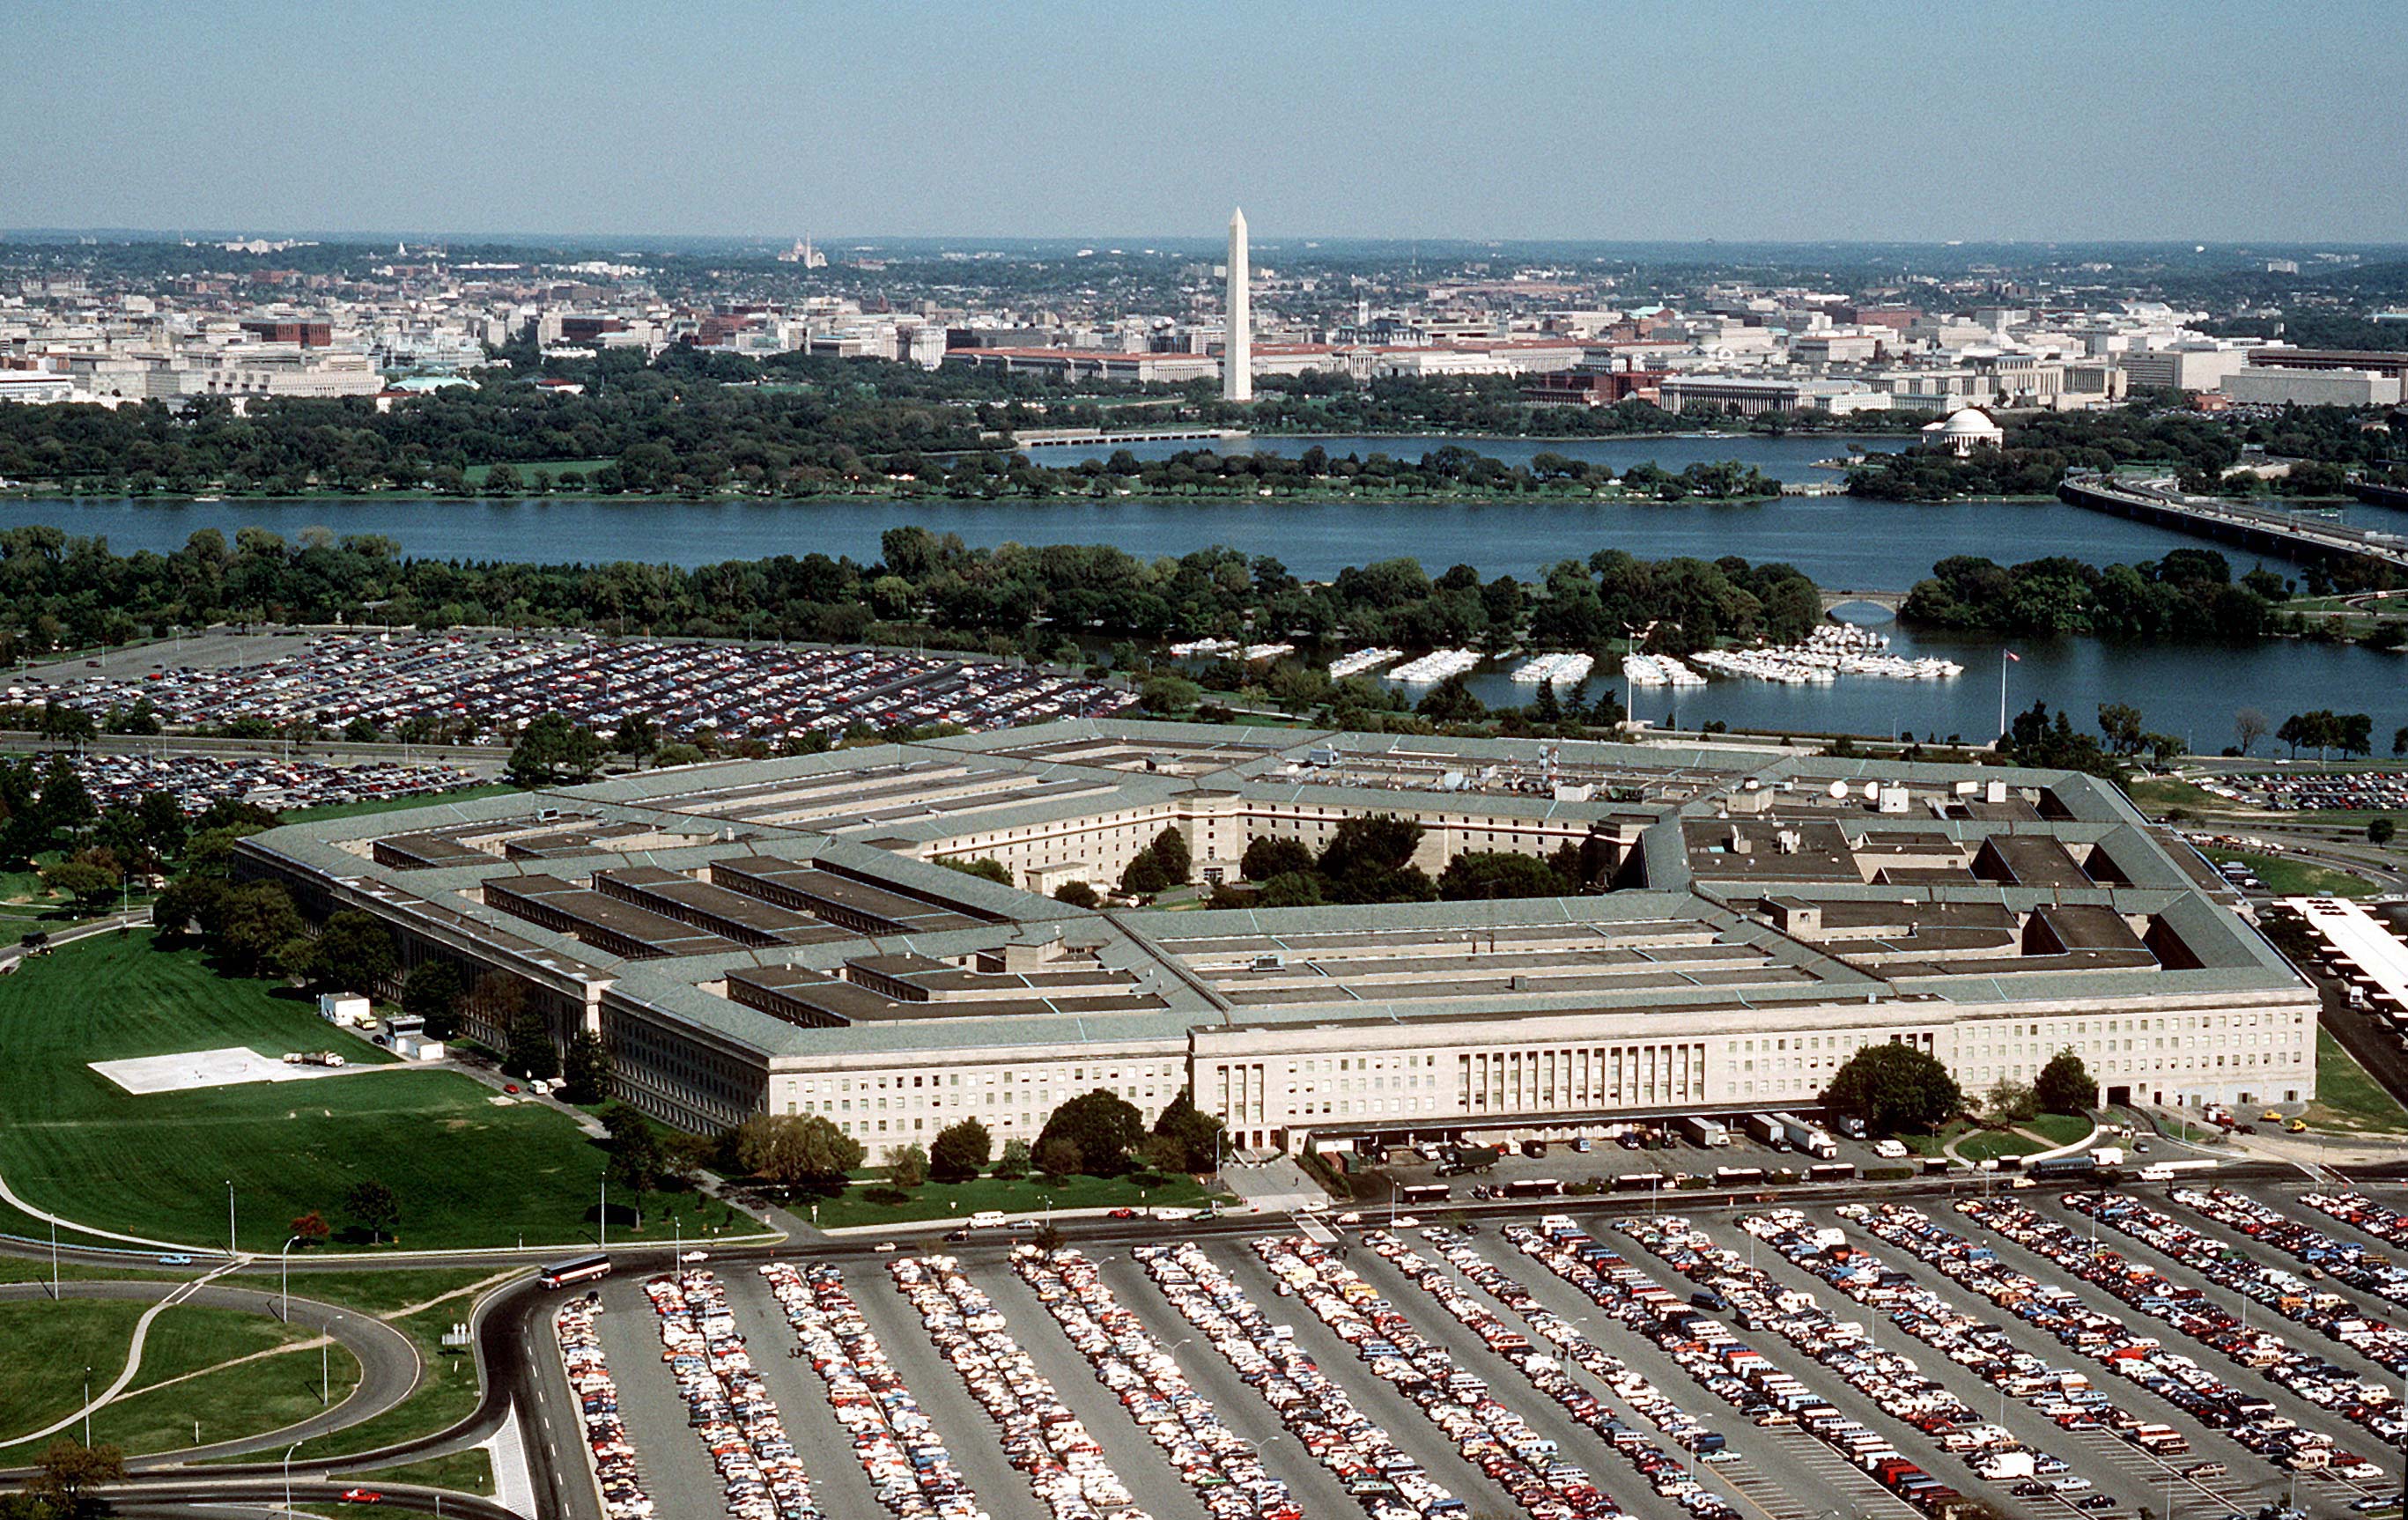 View of the Pentagon in Arlington, VA overlooking Washington Monument